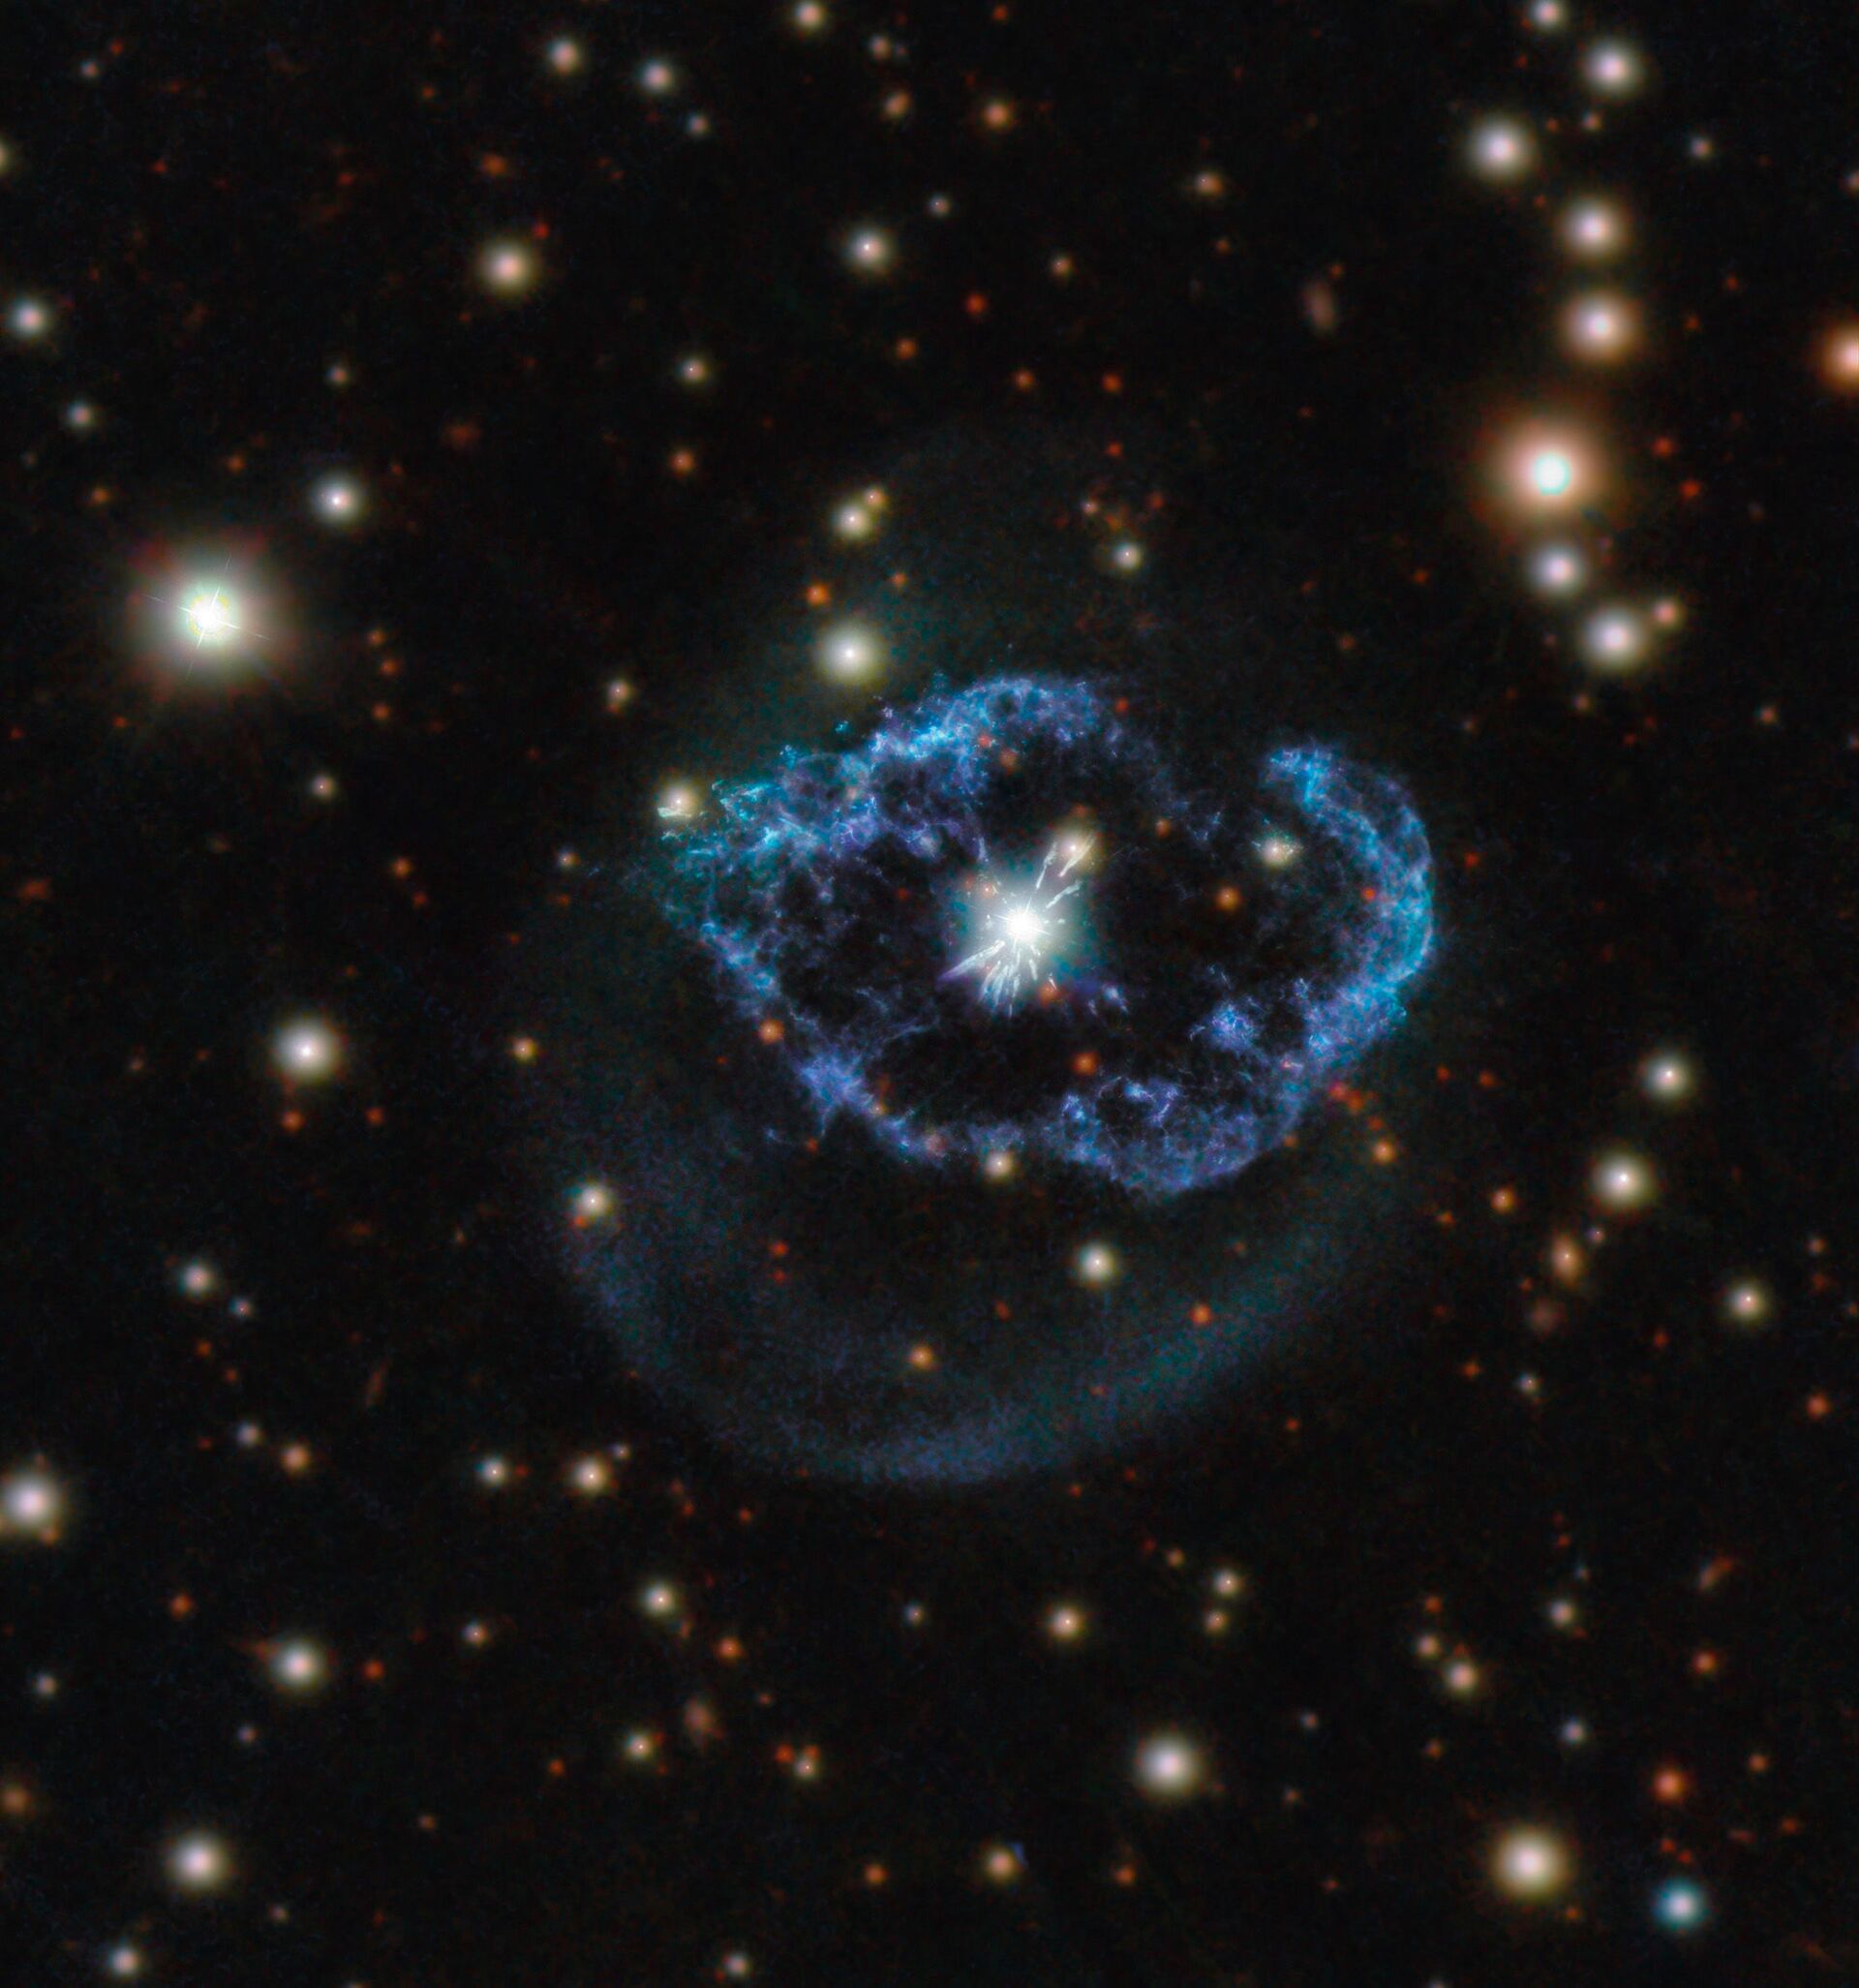 Nebulosa extraordinária é registrada pelo Telescópio Hubble (FOTO) - Sputnik Brasil, 1920, 15.03.2021